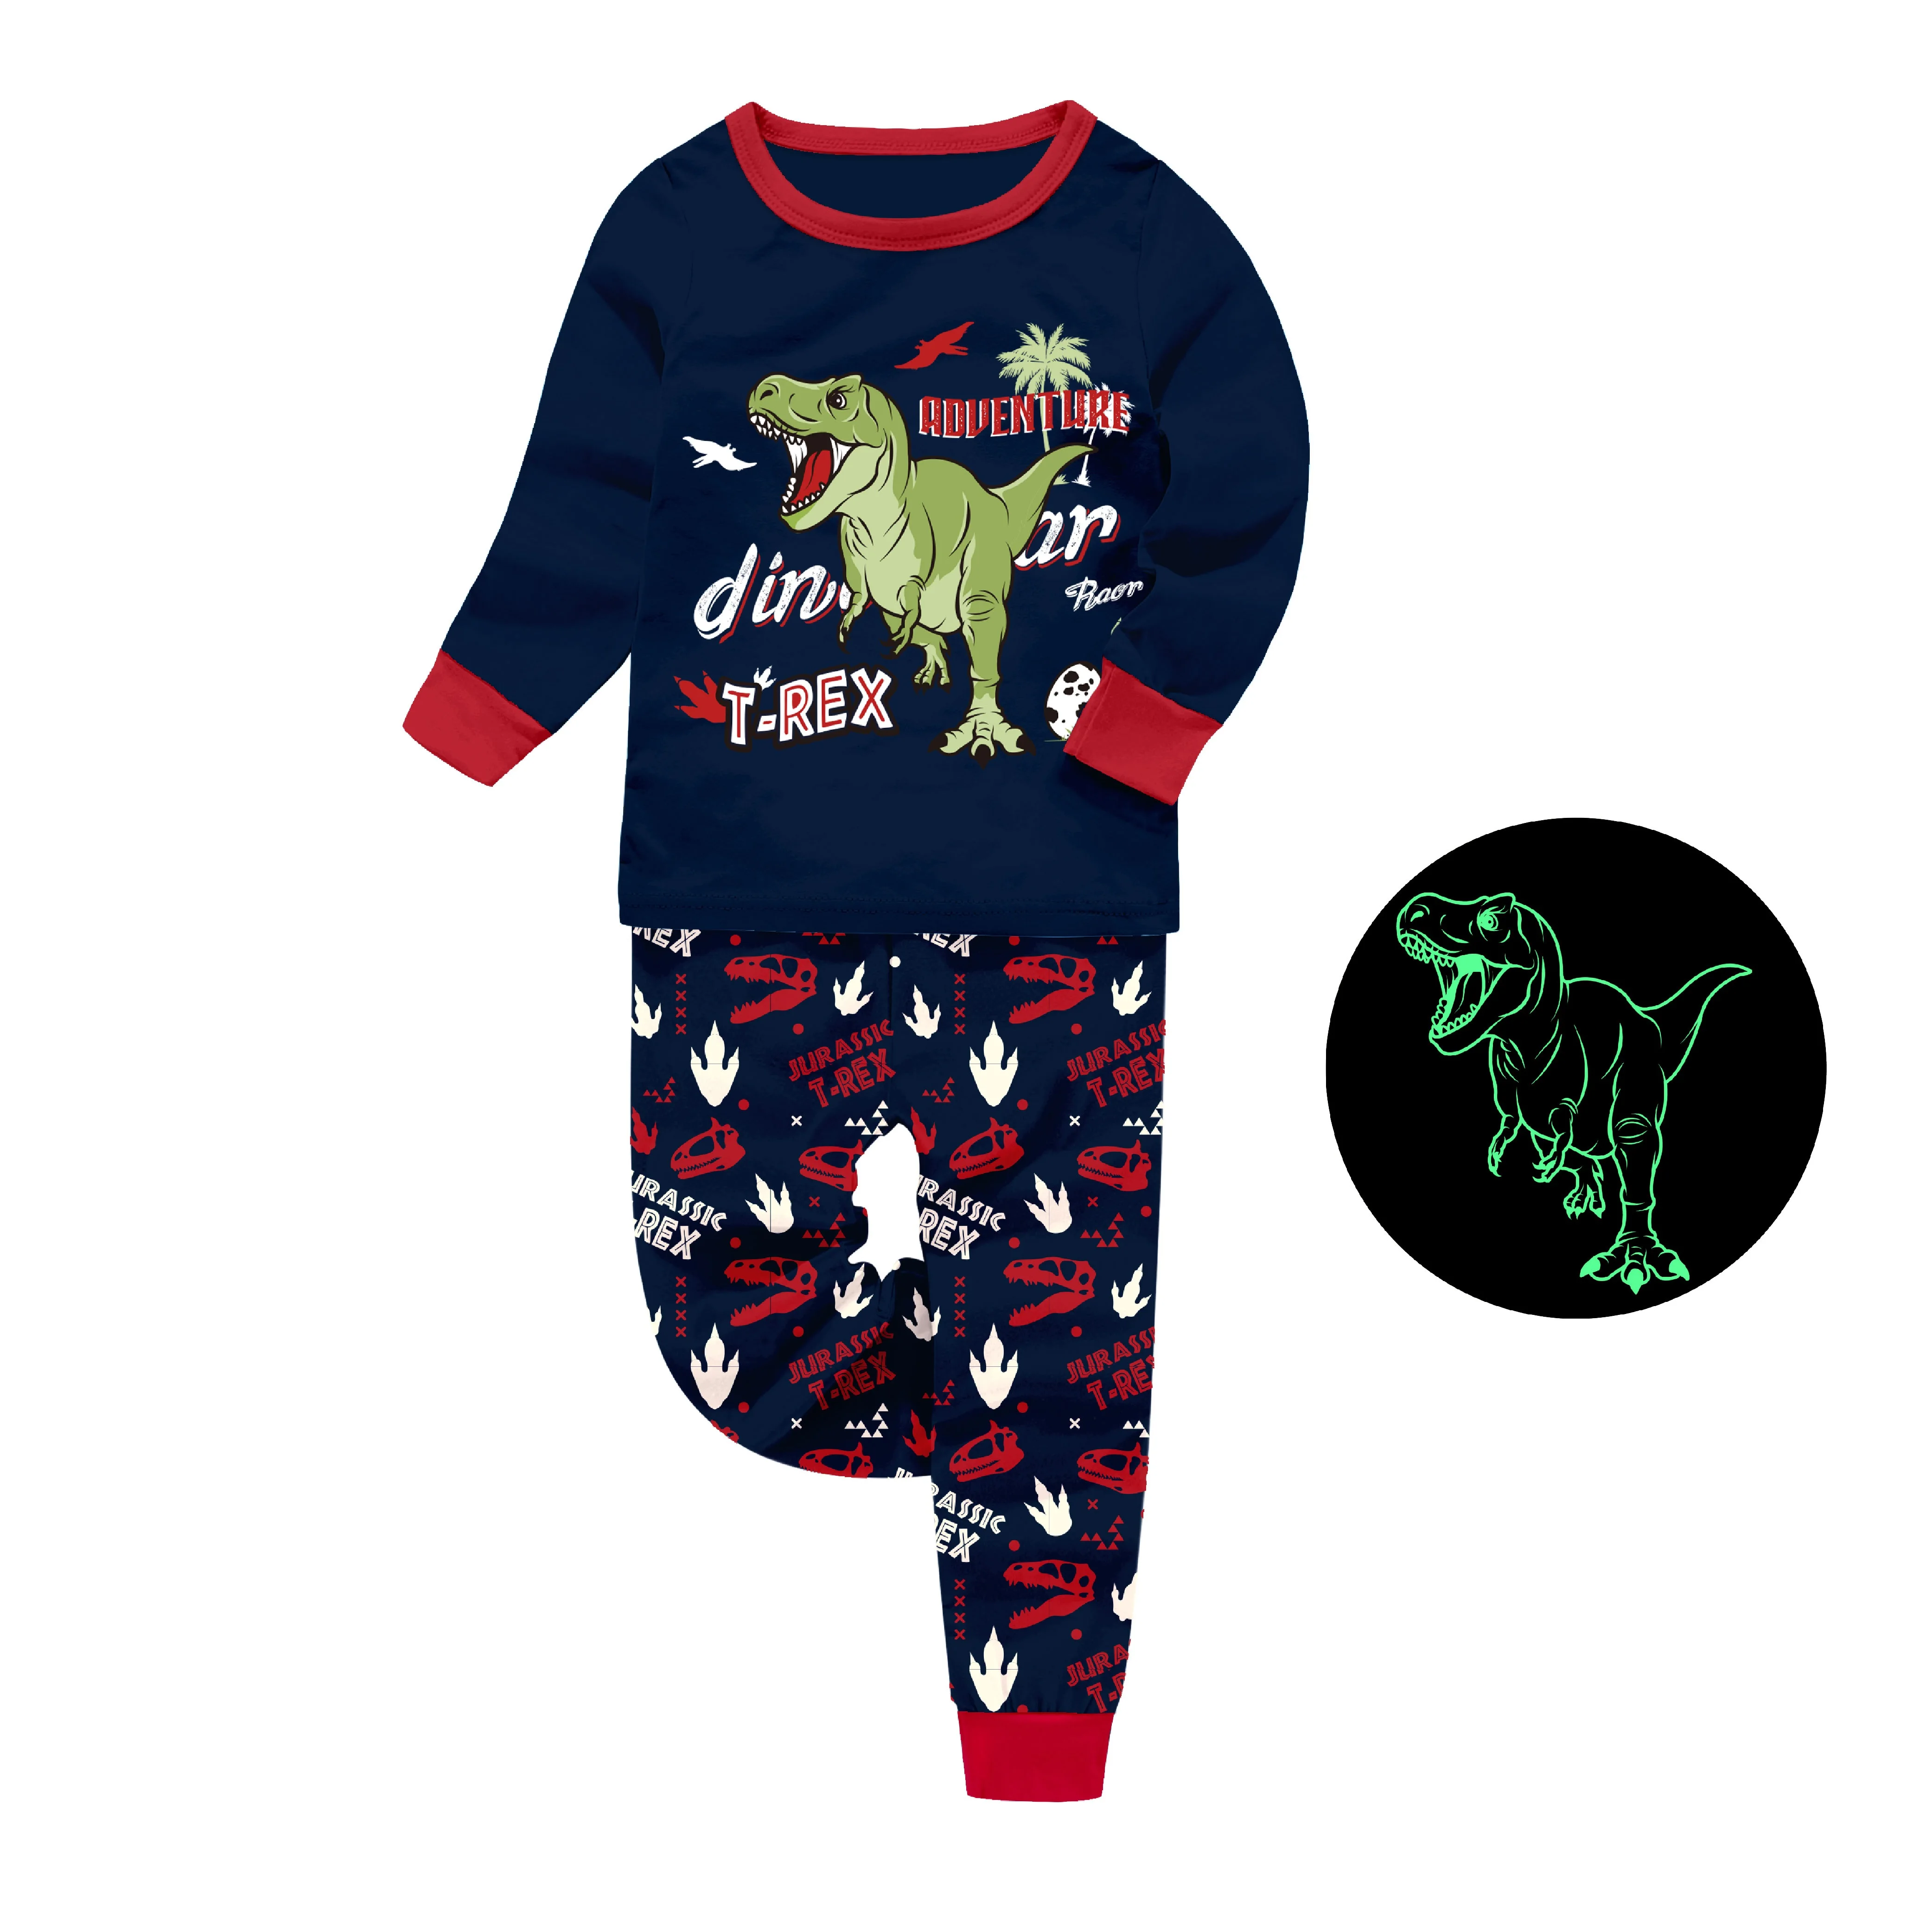 Boys Christmas Pajamas Kids Pjs Sets Cotton Toddler Clothes Children Sleepwear 